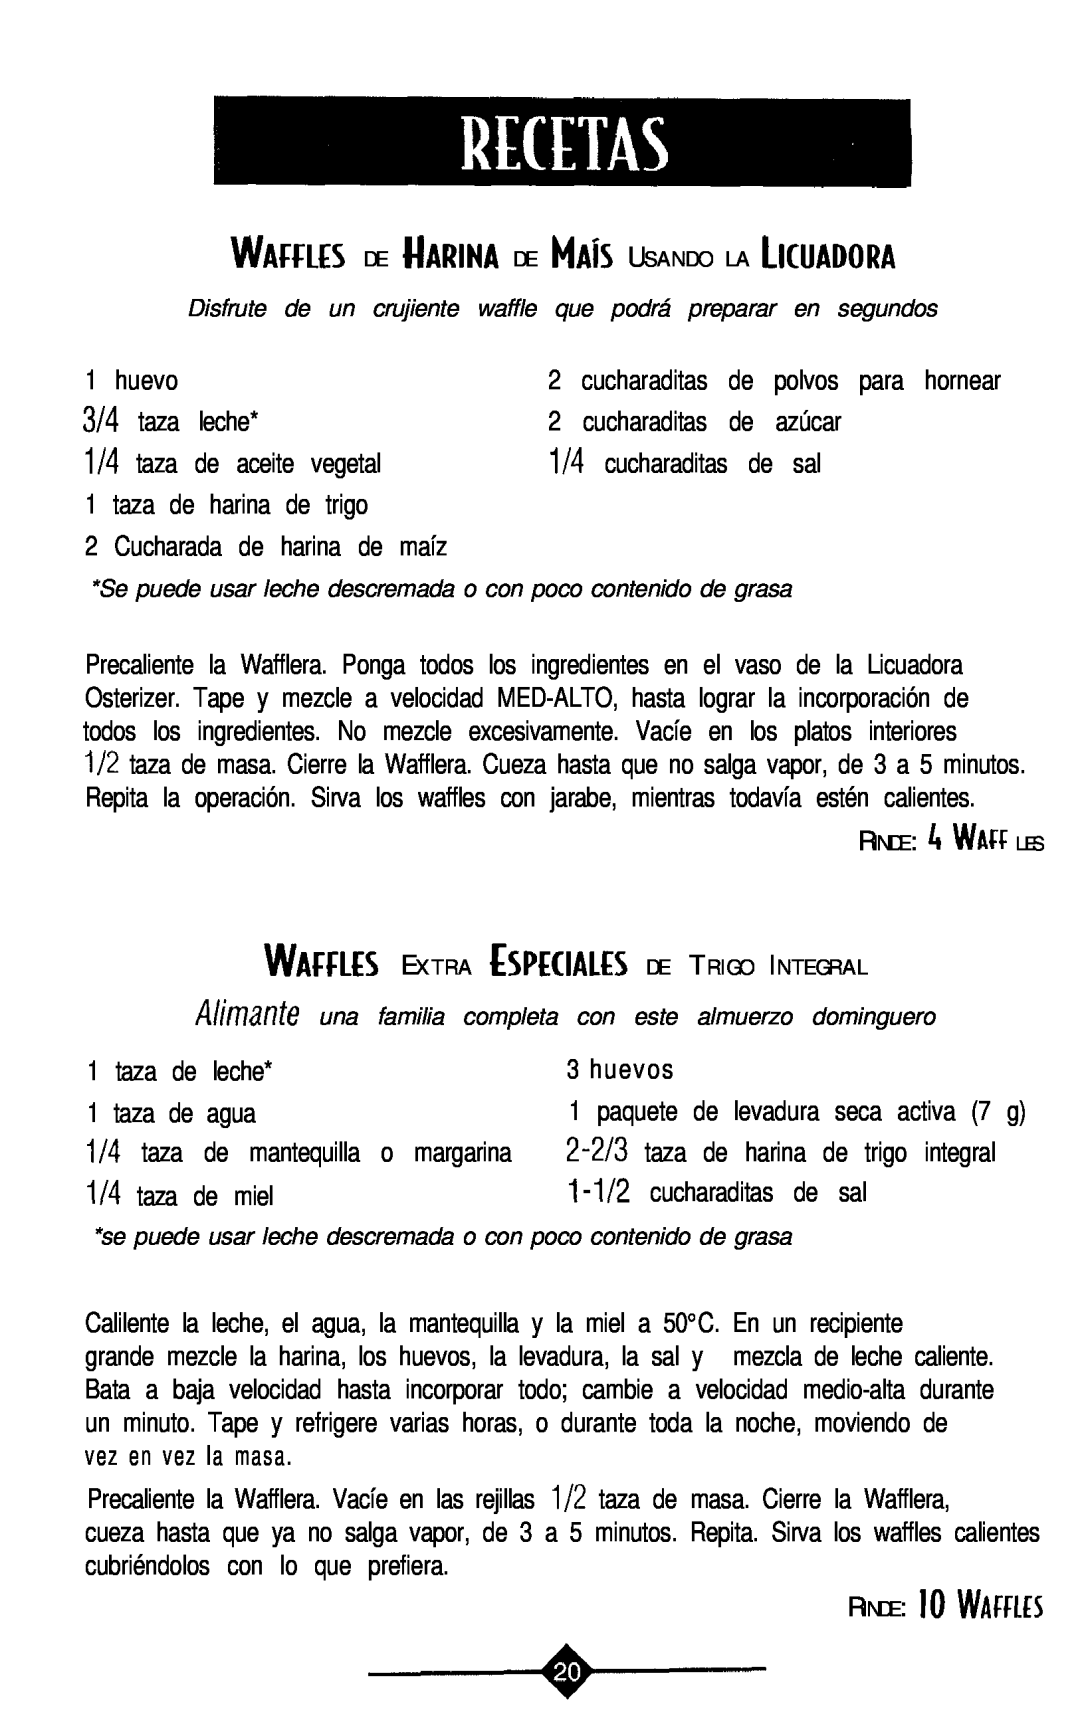 Sunbeam 3856-1 instruction manual WAffLfs, WAffus DE UARINA DE MAís USANDO LA LICOAD~RA 